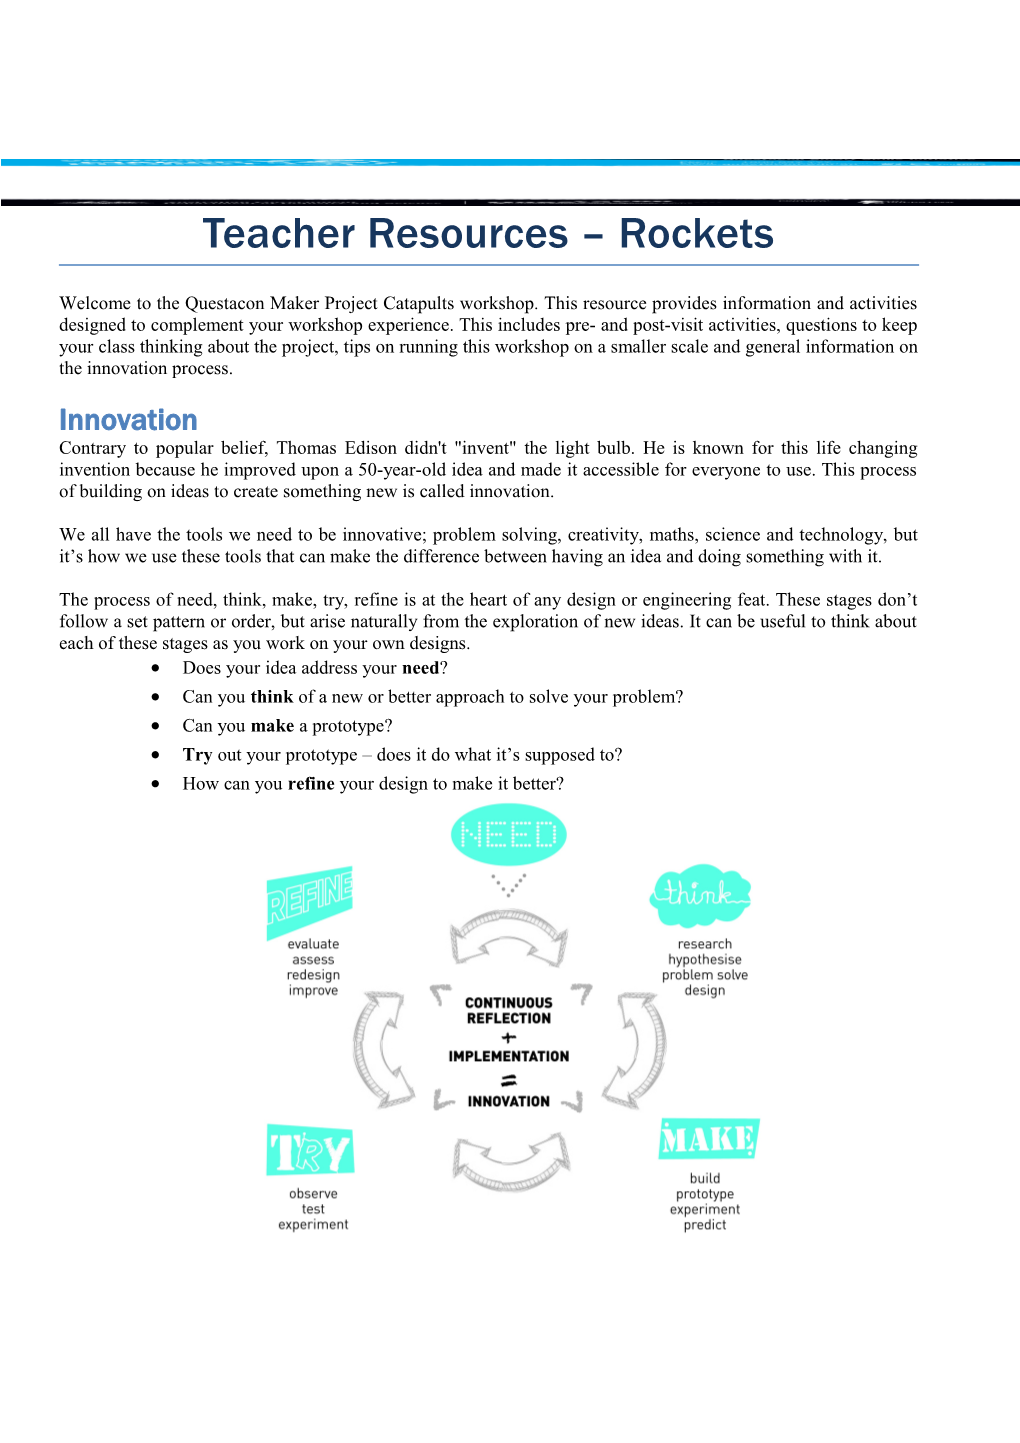 Teacher Resources Rockets